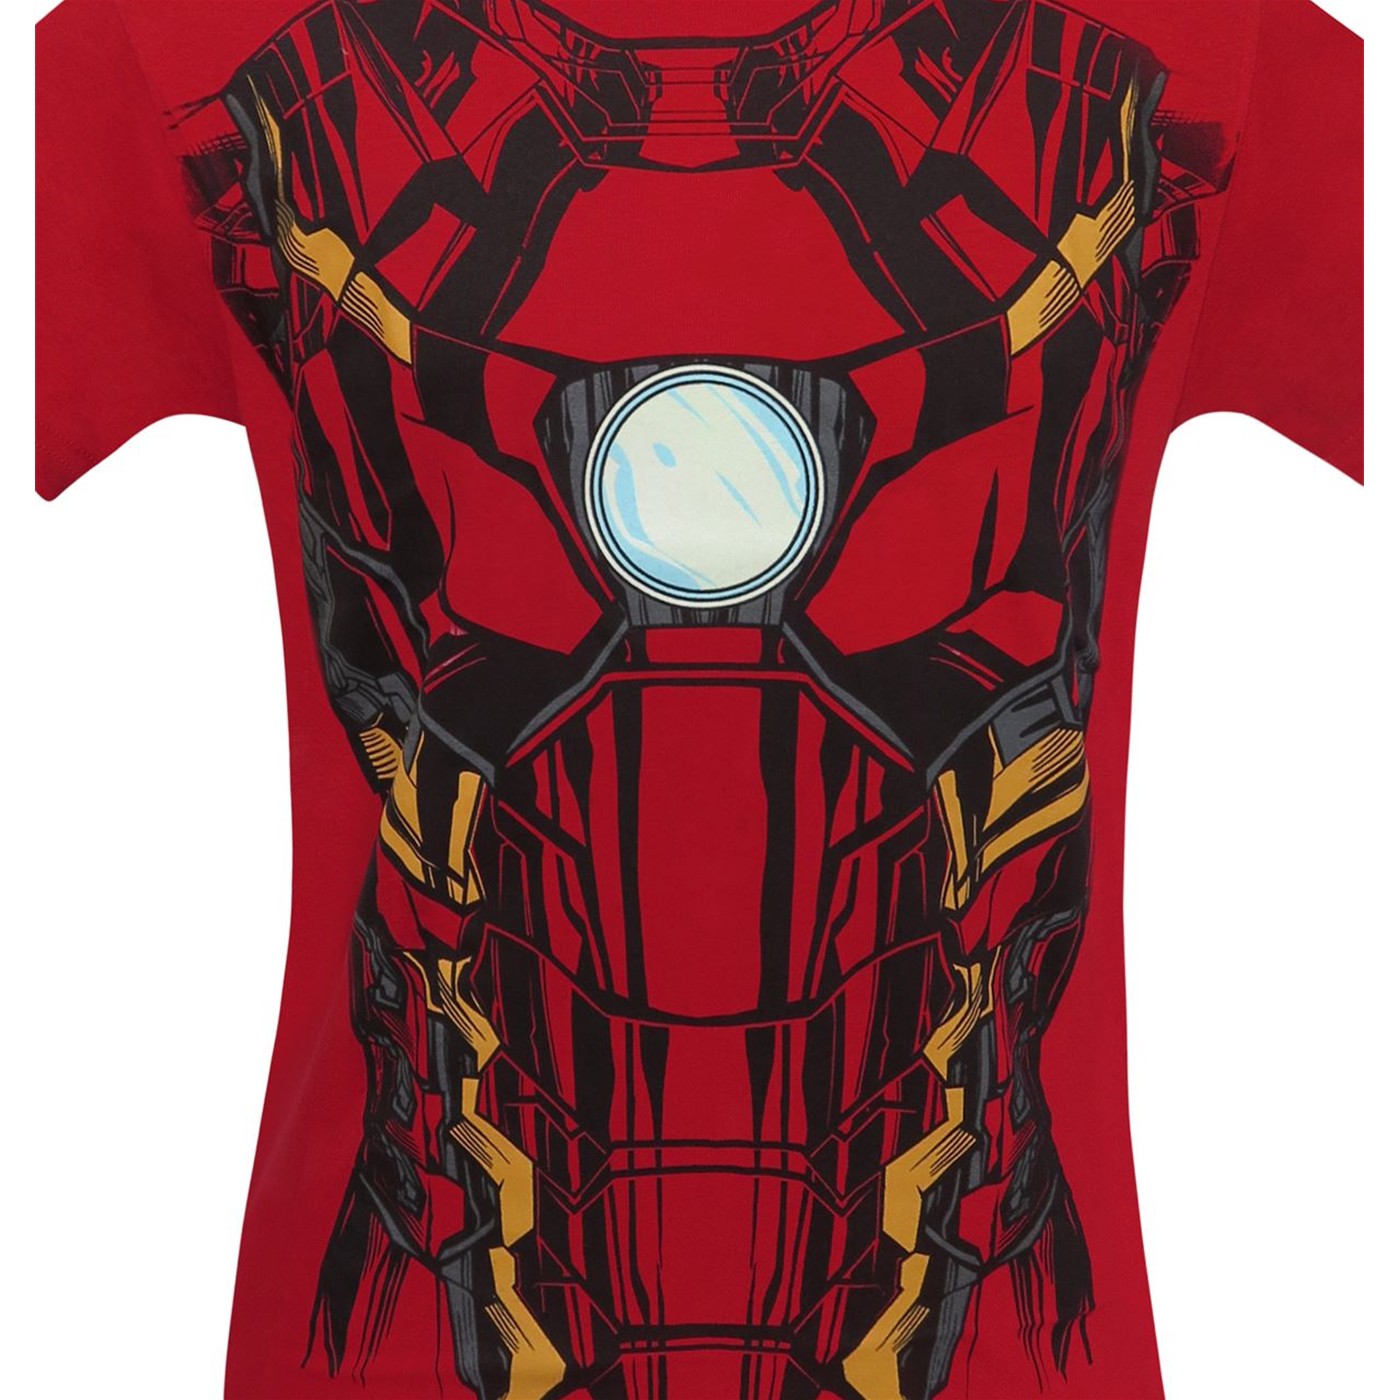 Iron Man Suit-Up Men's Costume T-Shirt